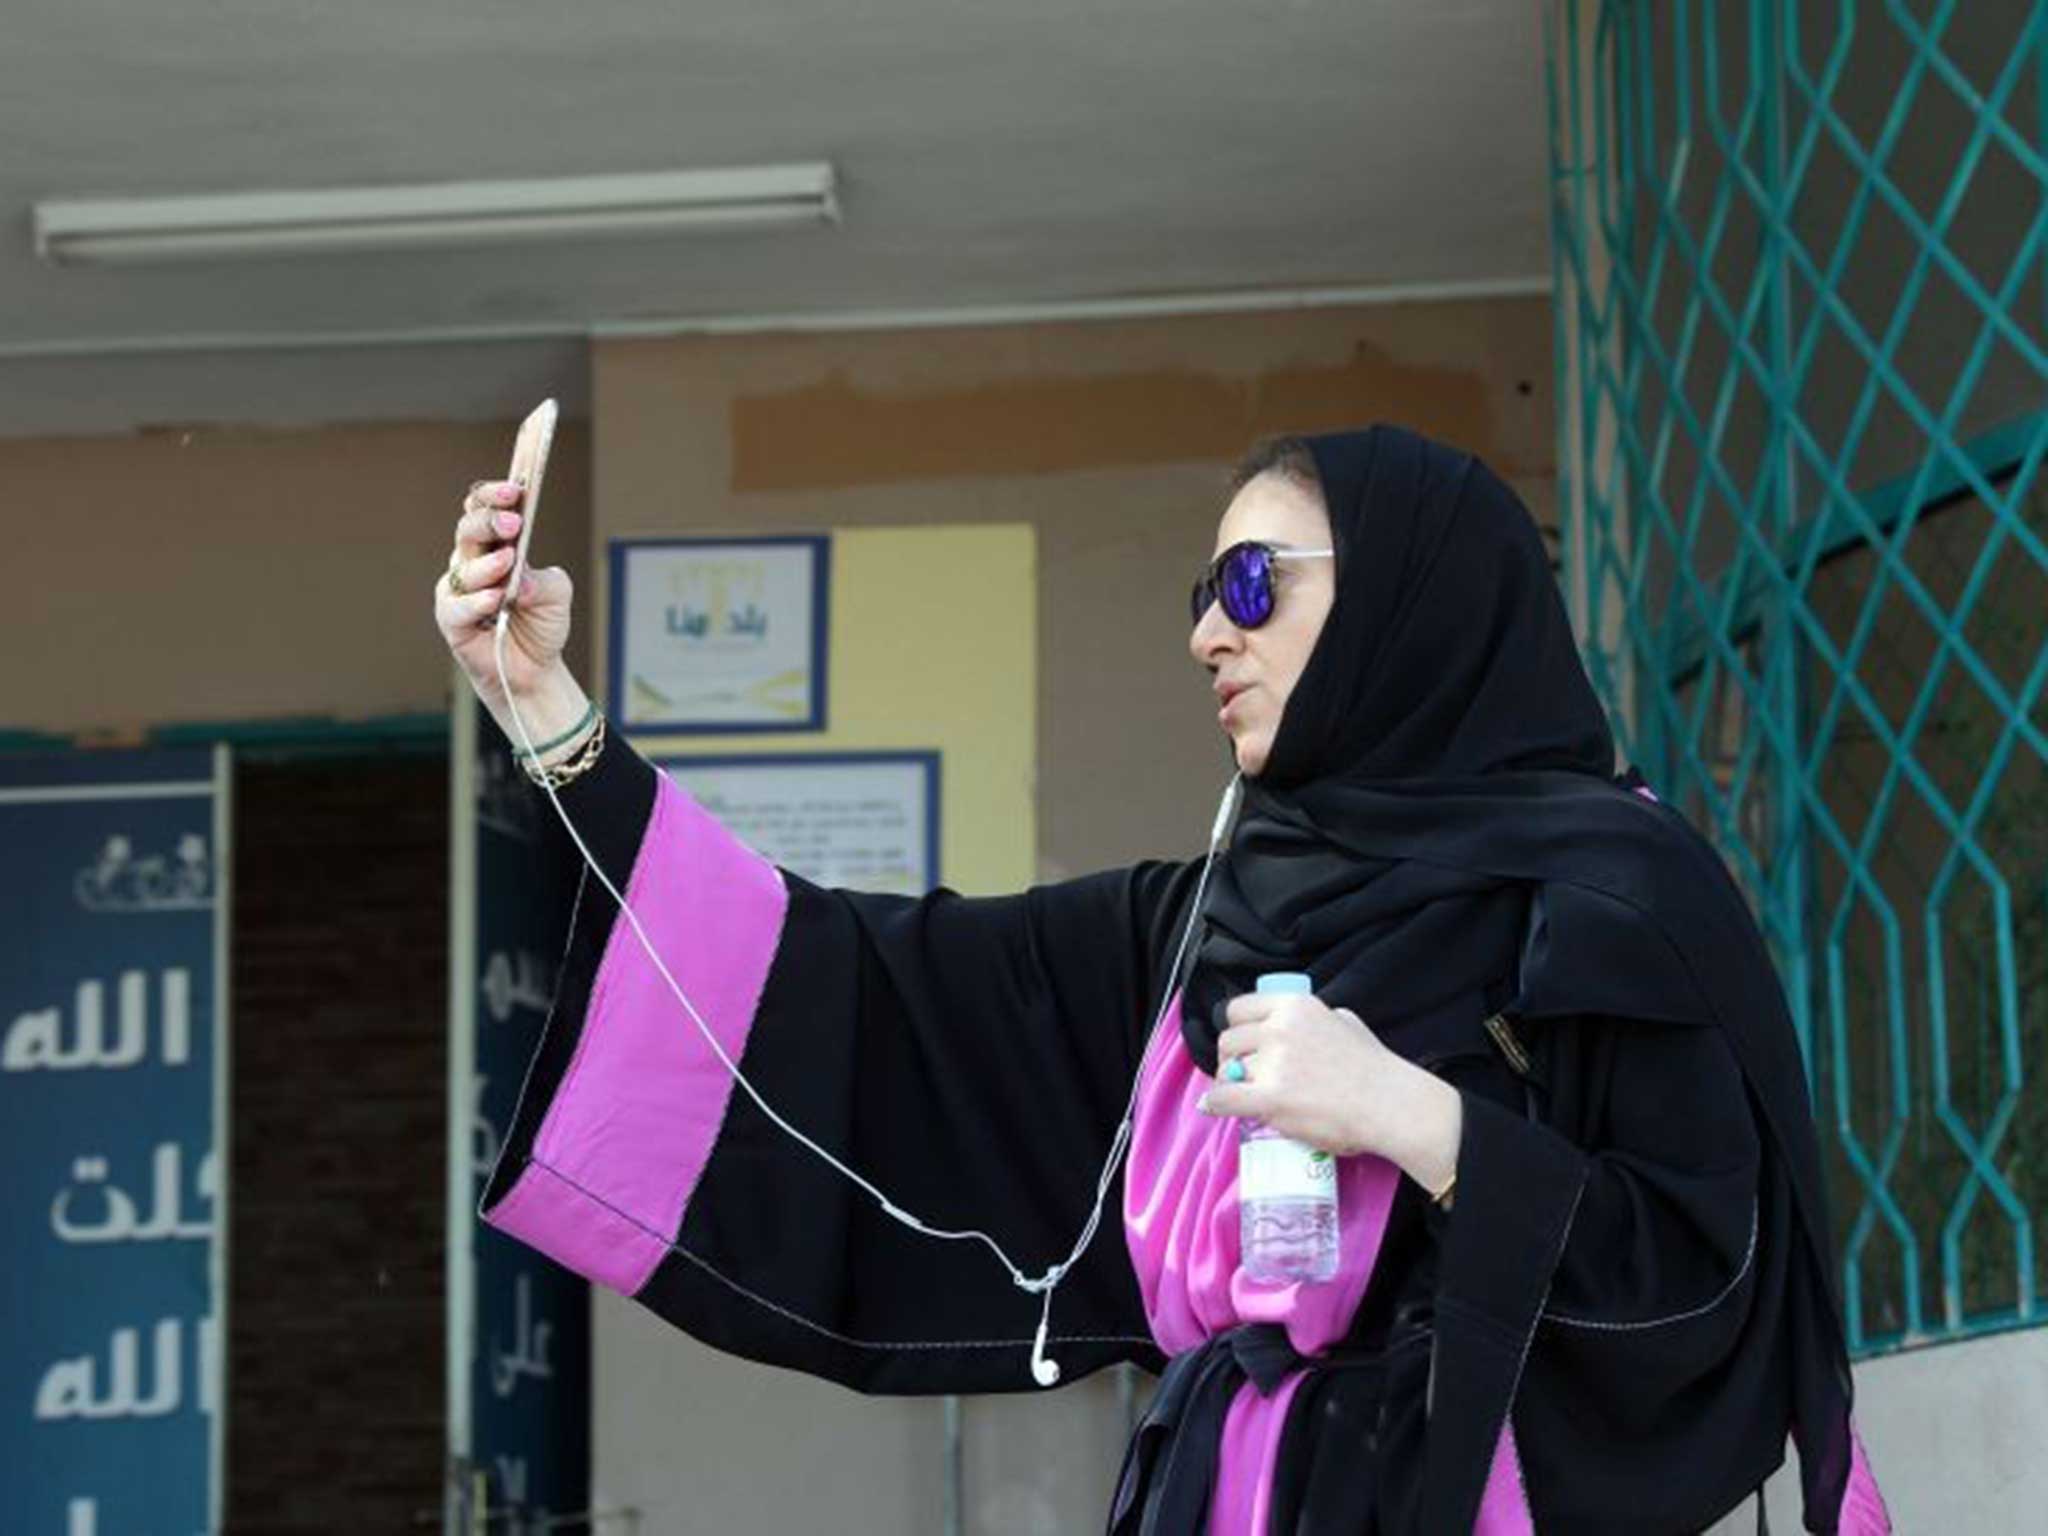 Saudi women’s innovative use of social media has allowed them some freedom